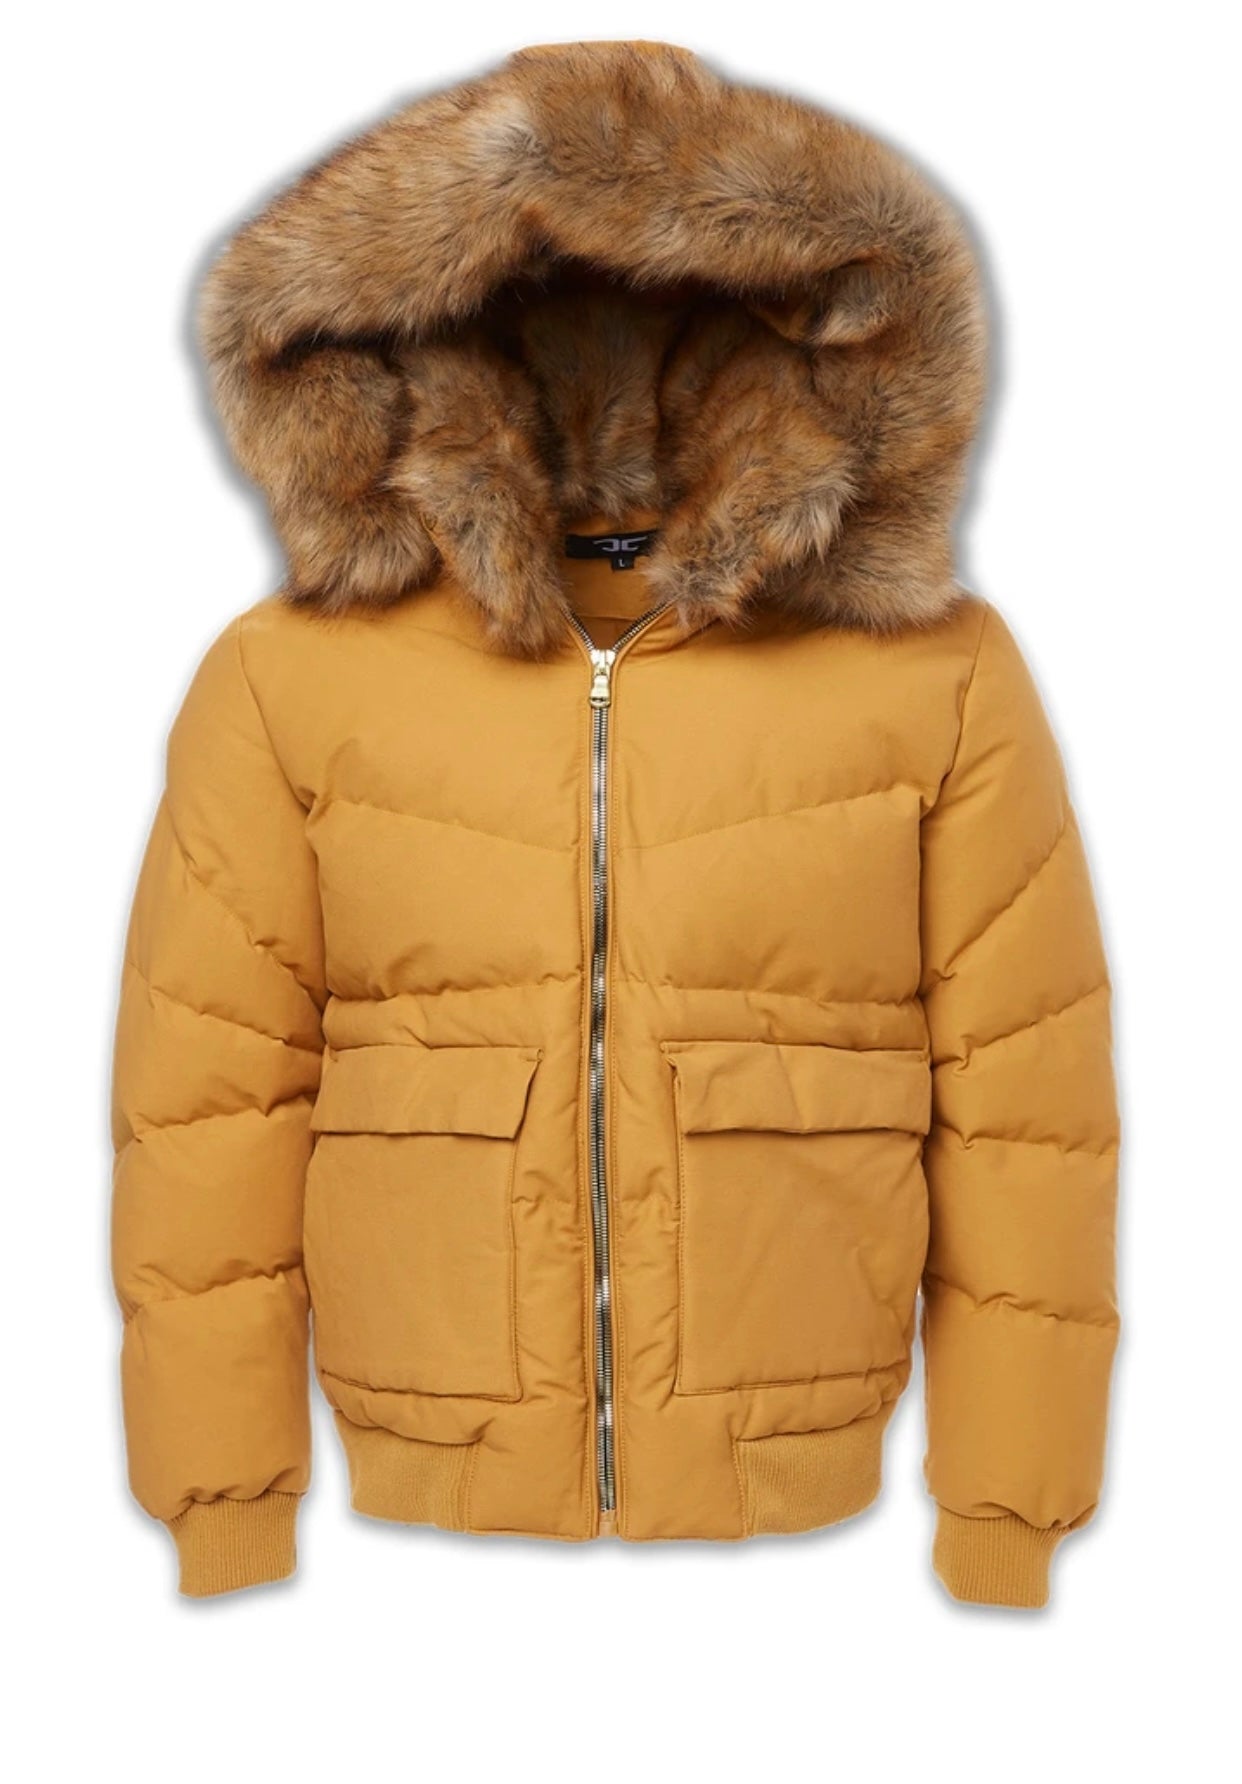 Jordan Craig Hollis  Canvas Puffer jacket w fur hood  Desert 91541m